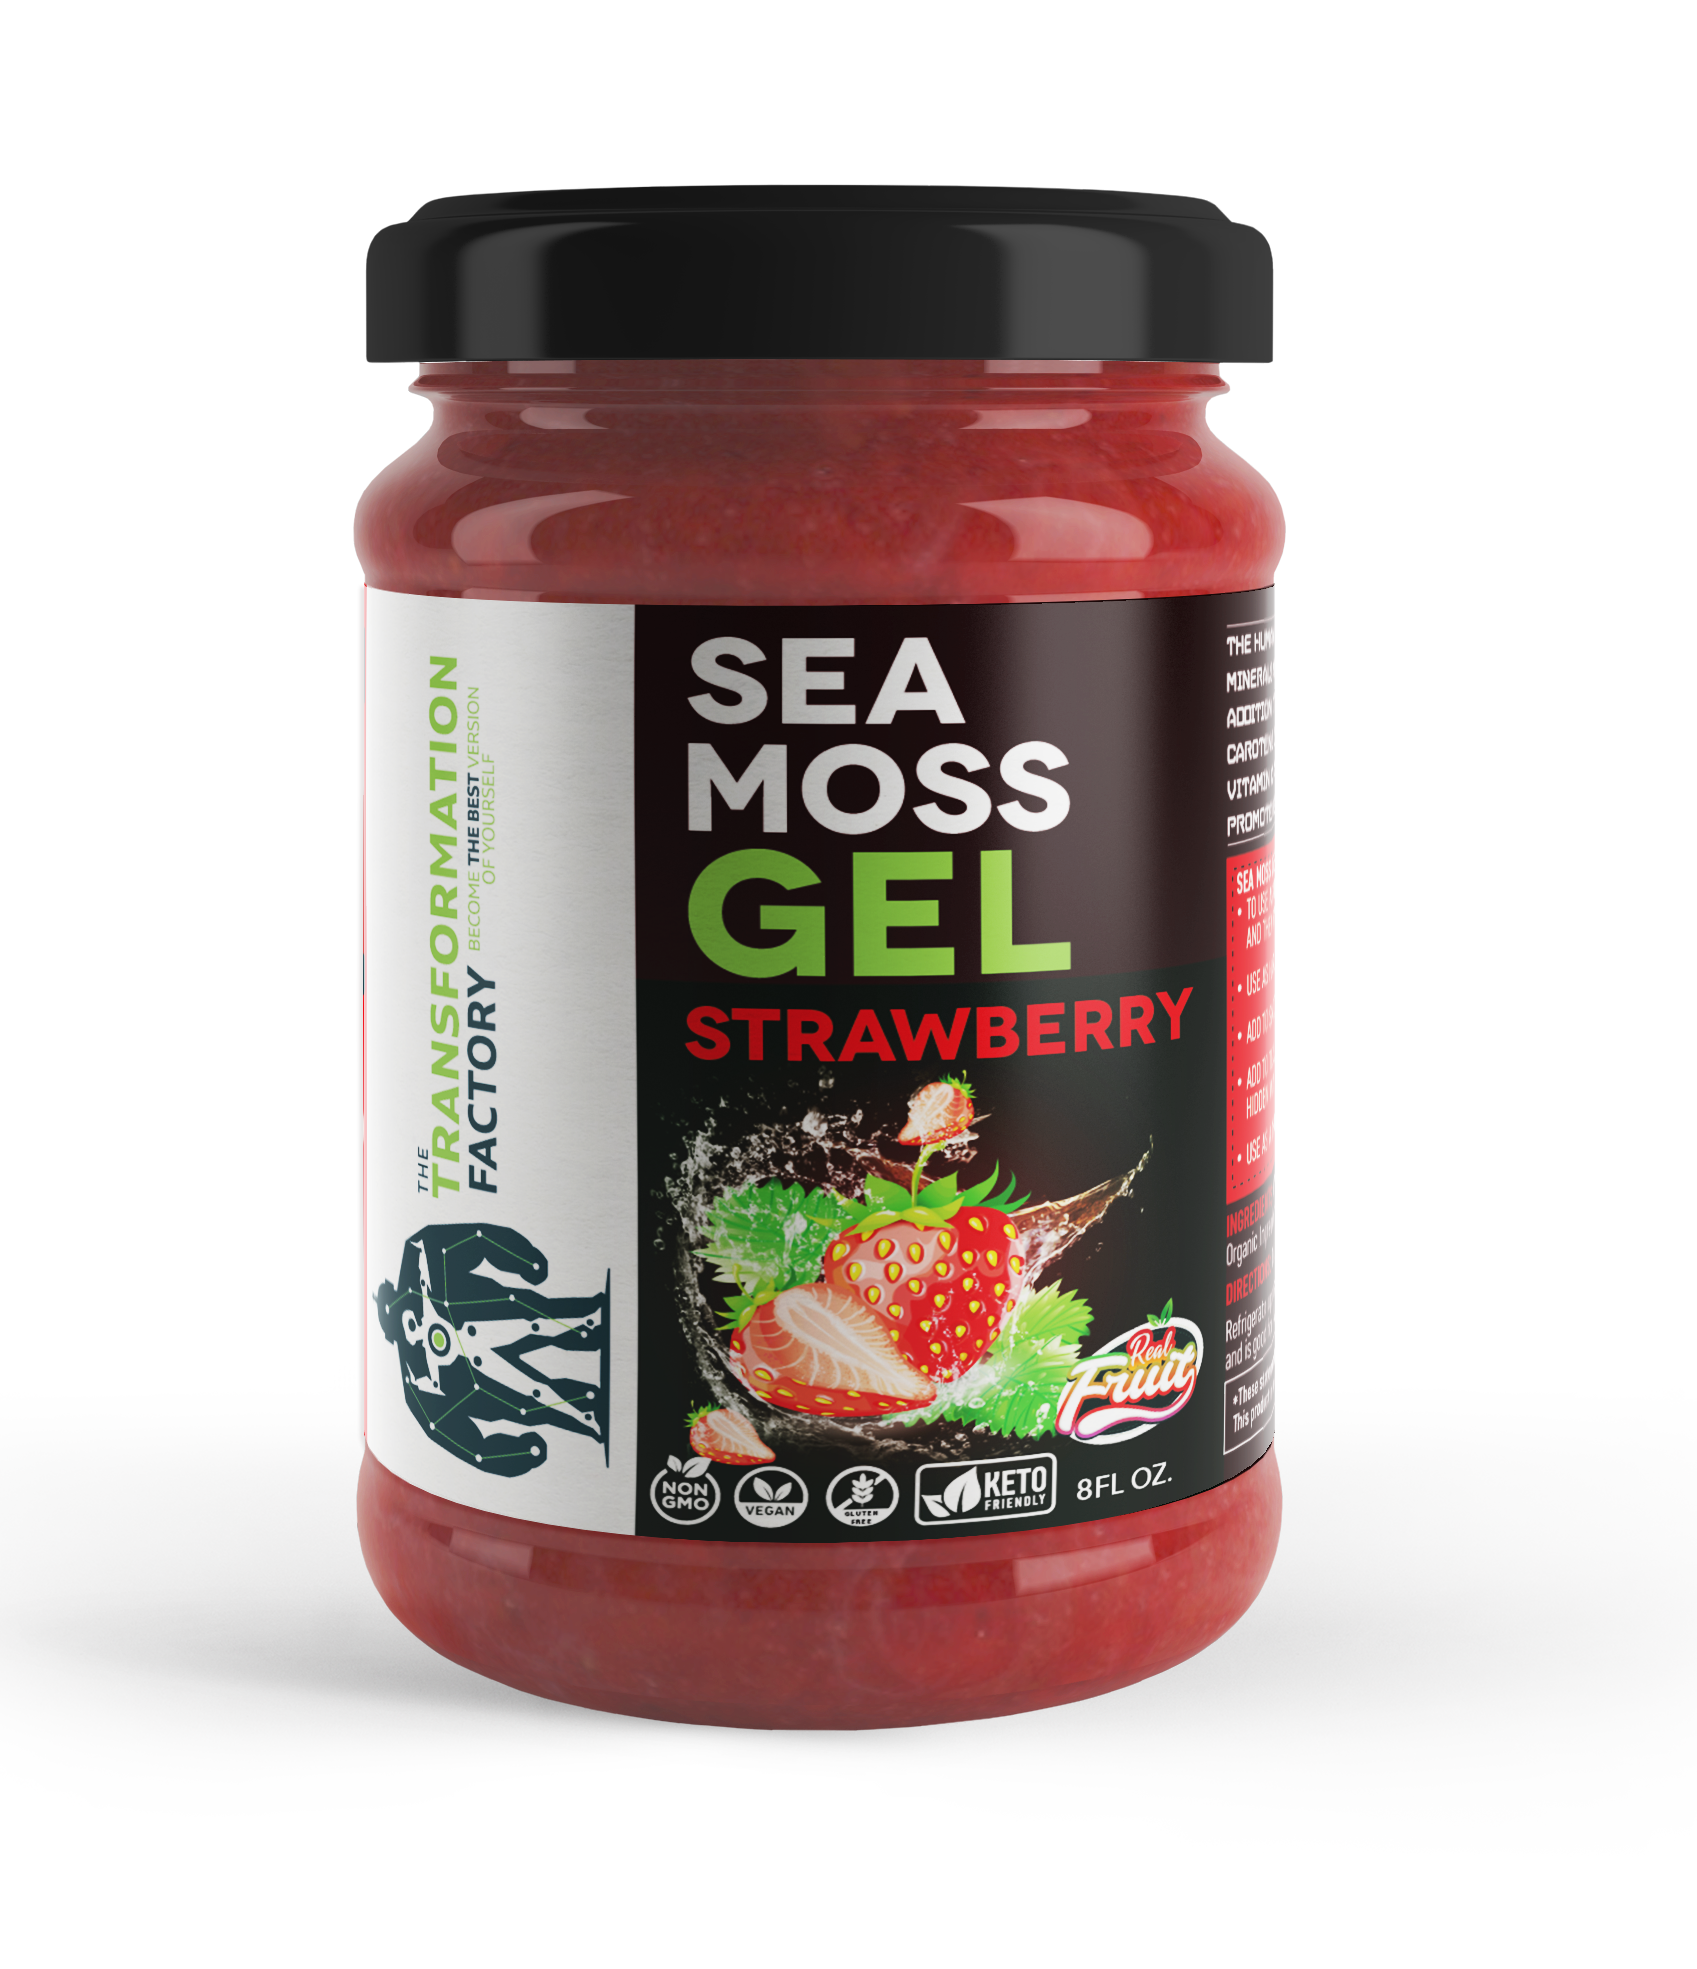 A jar of strawberry sea moss gel